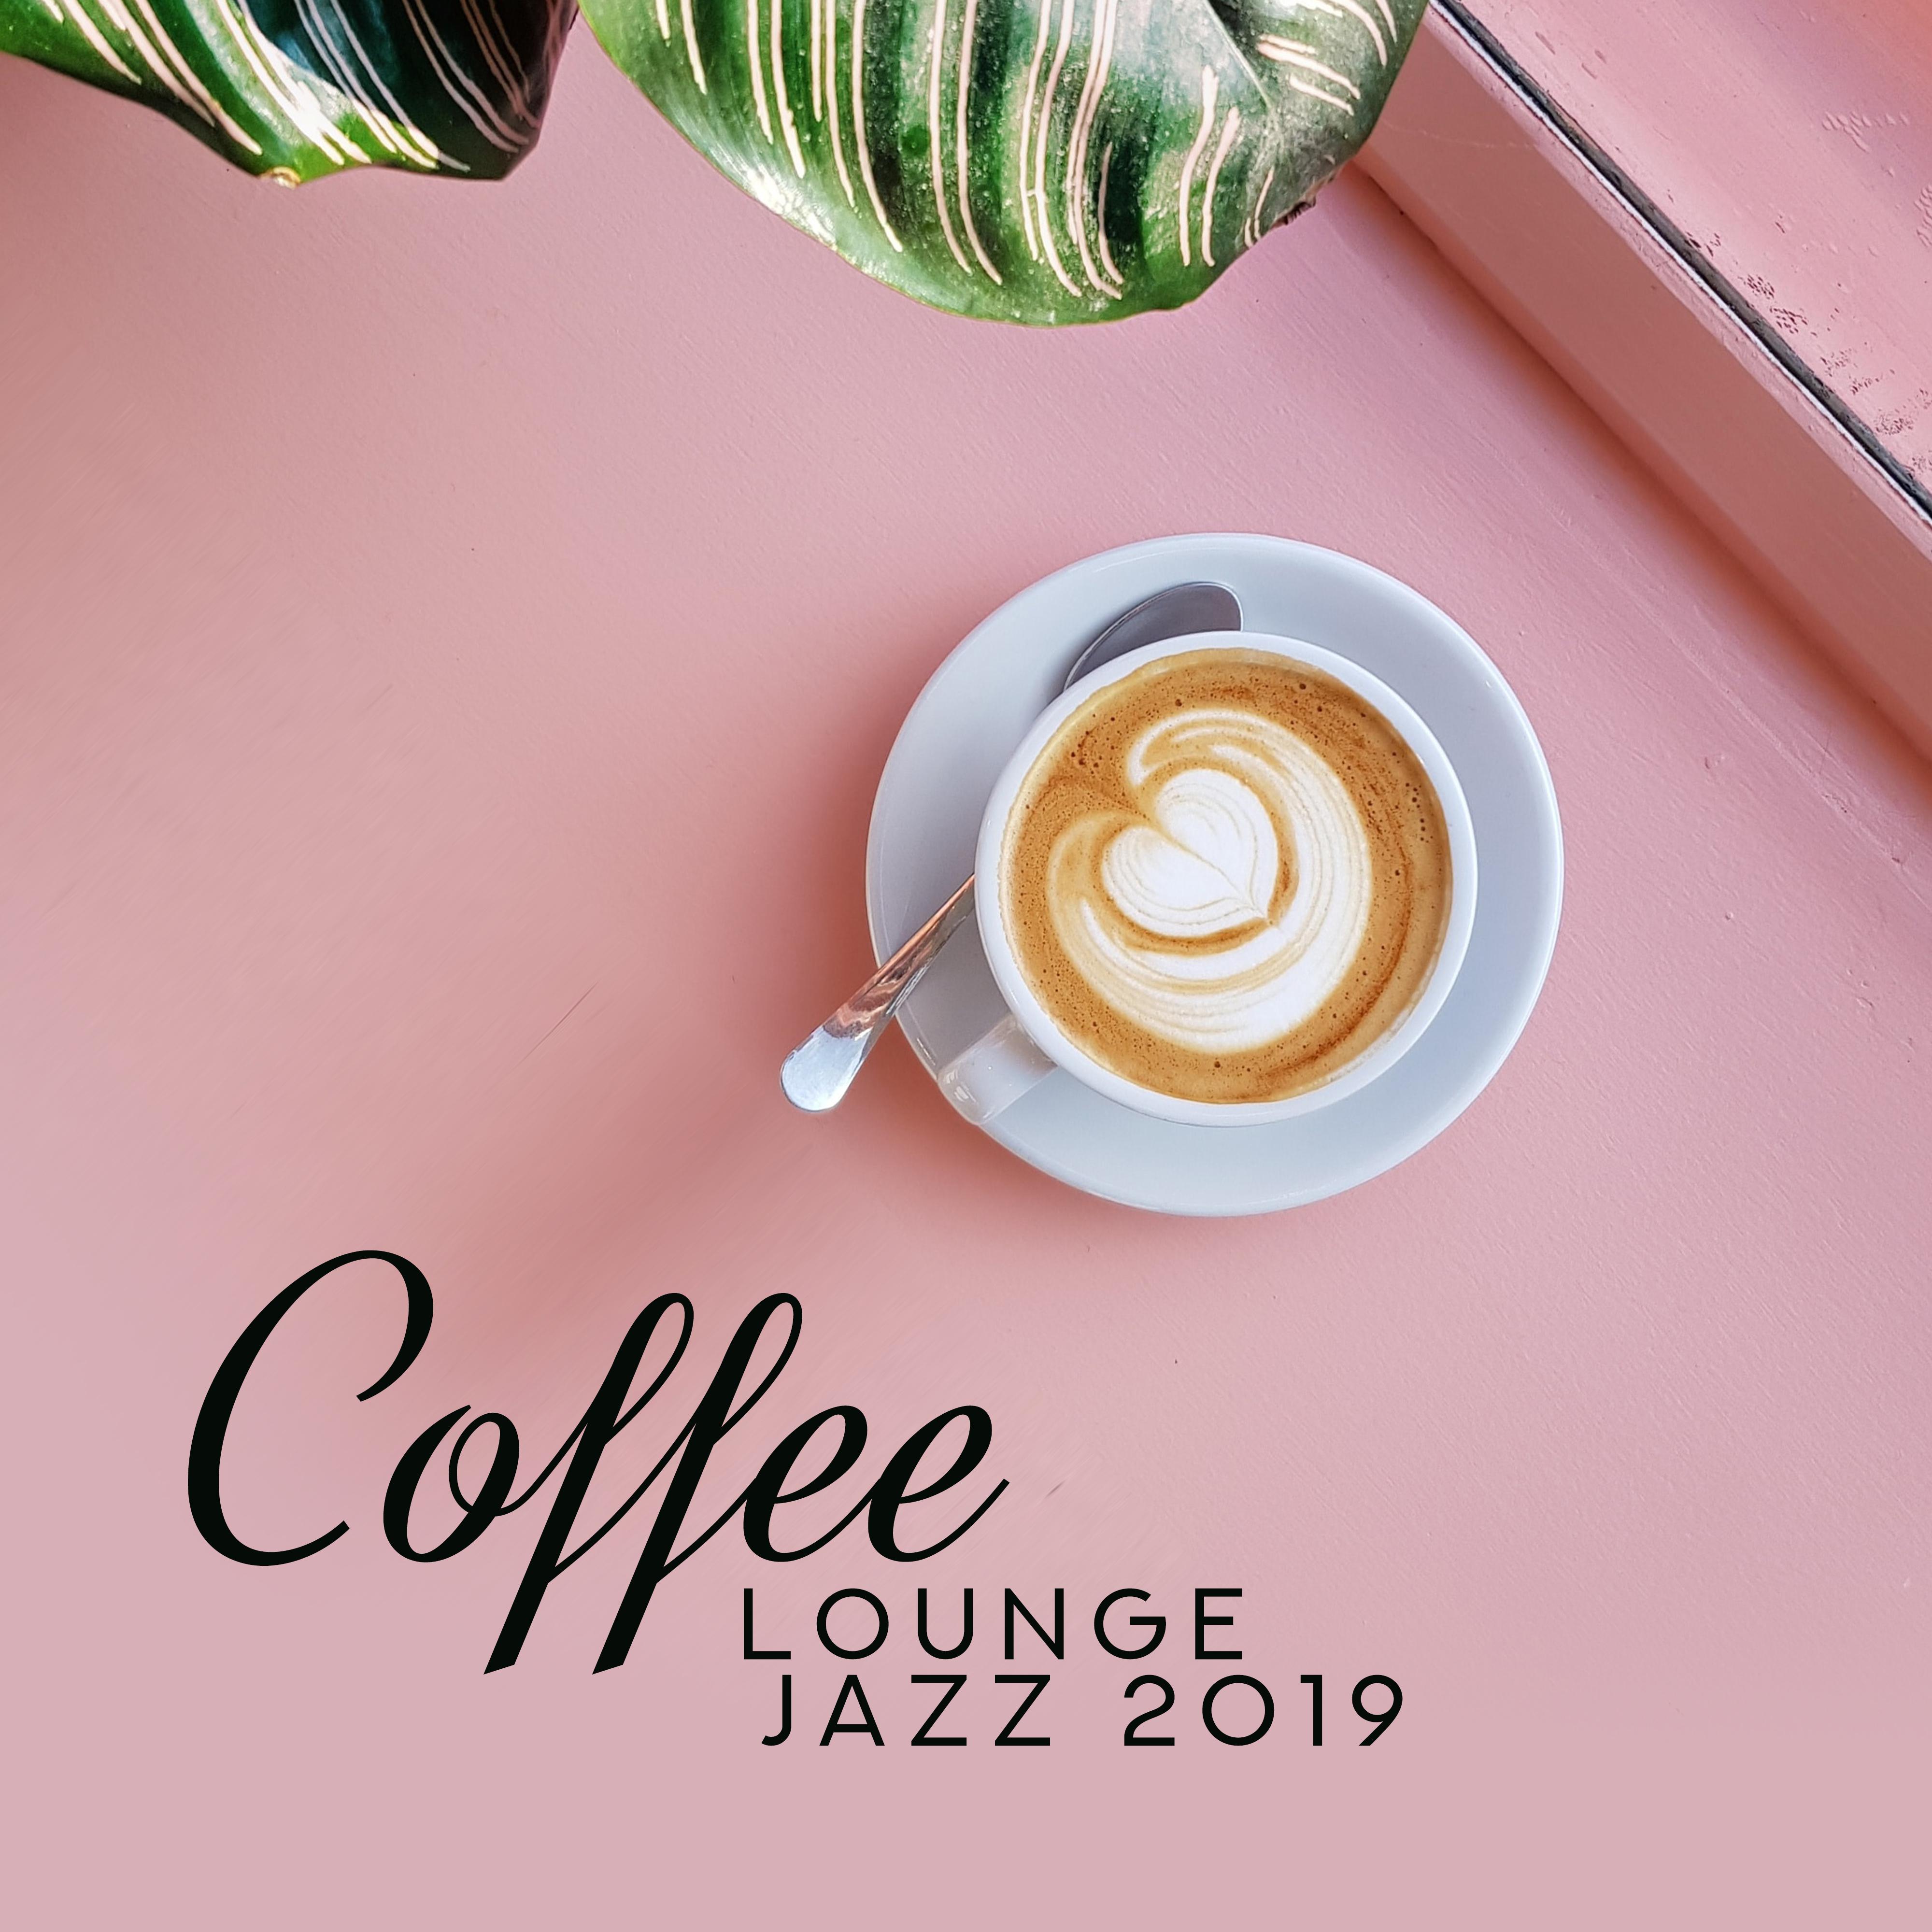 Coffee Lounge Jazz 2019: Jazz After Work, Smooth Music for Restaurant, Coffee, Instrumental Jazz Music Ambient, Coffee Mix 2019